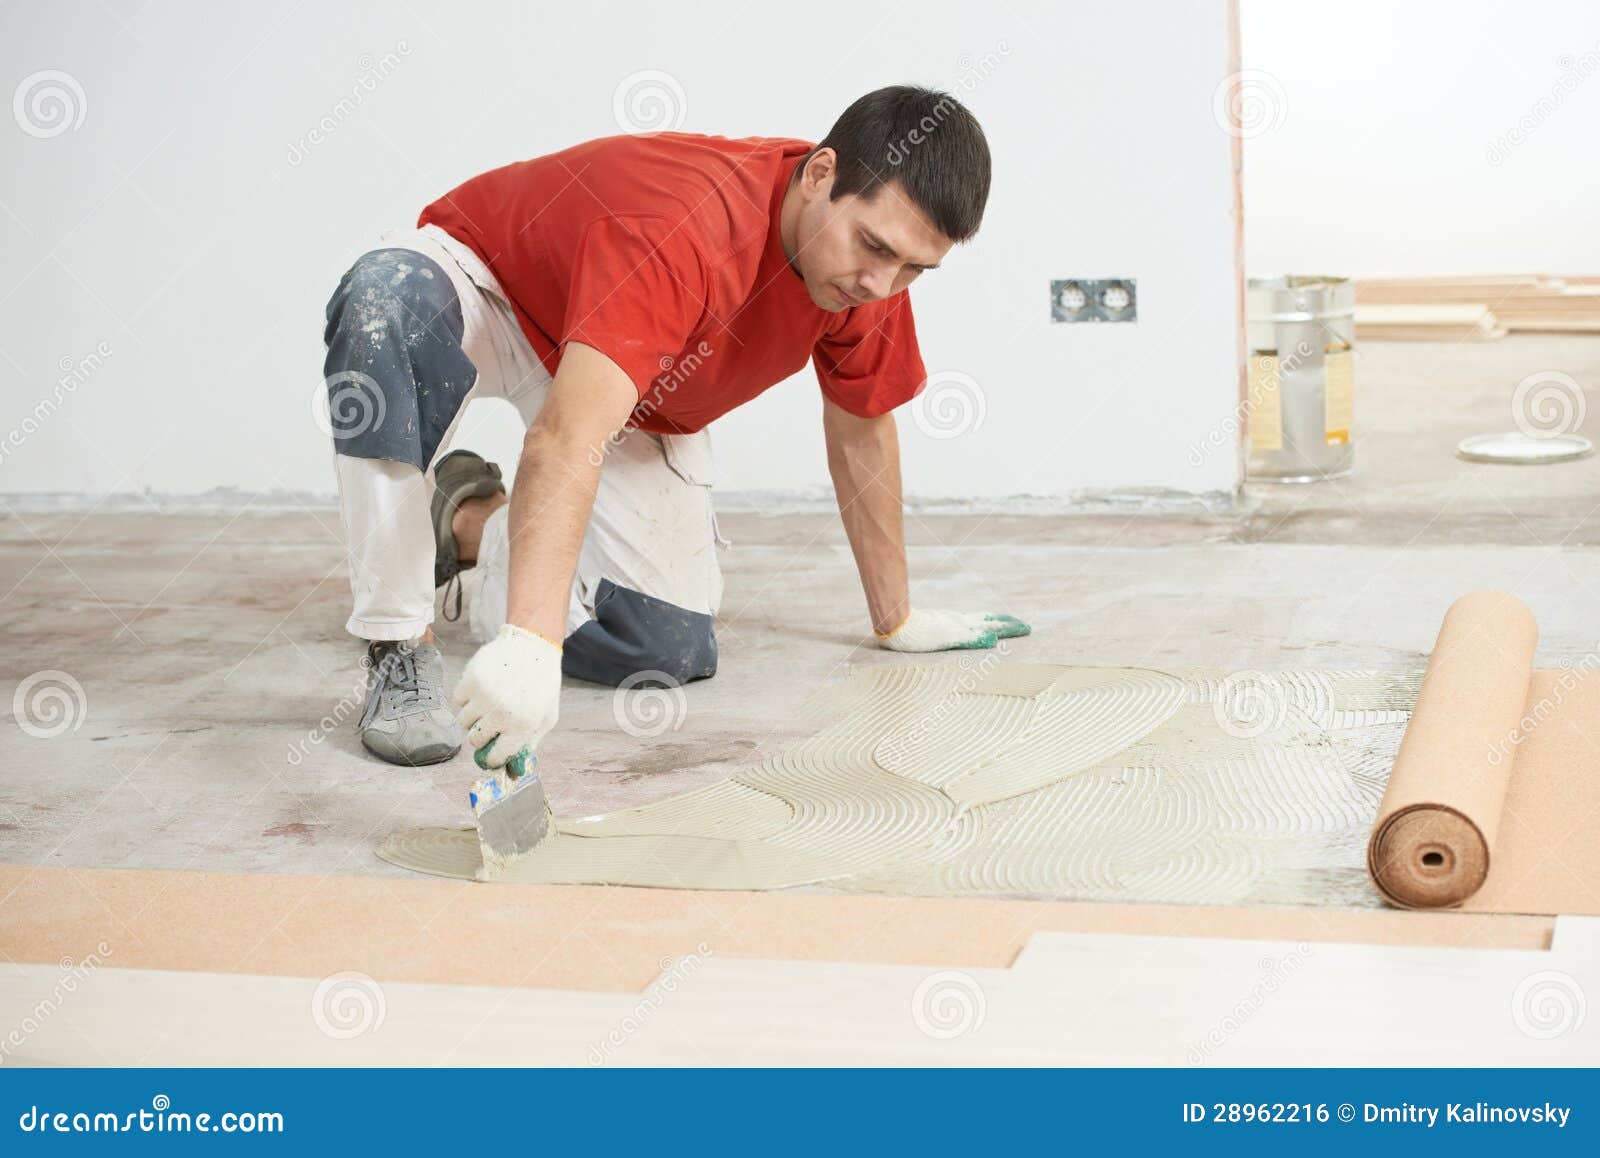 Parquet Floor Work With Stock Photo Image Of Preparation 28962216